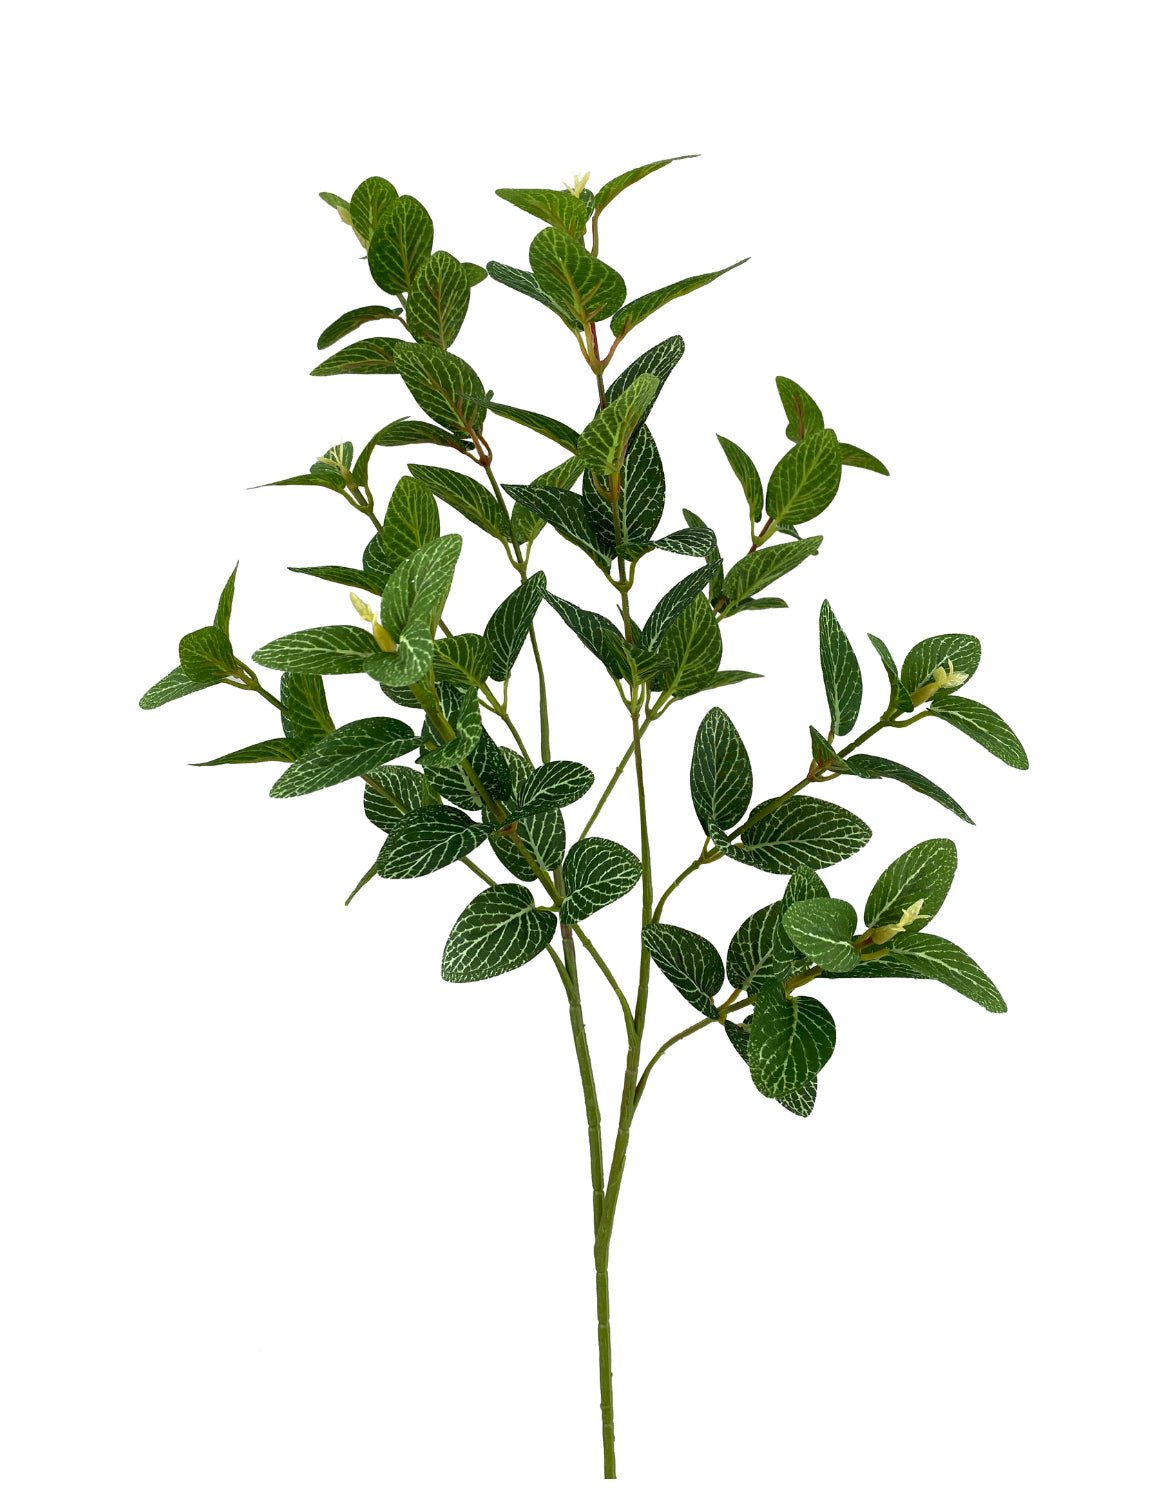 Laurel leaf variegated spray - Greenery MarketArtificial Flora13580GN